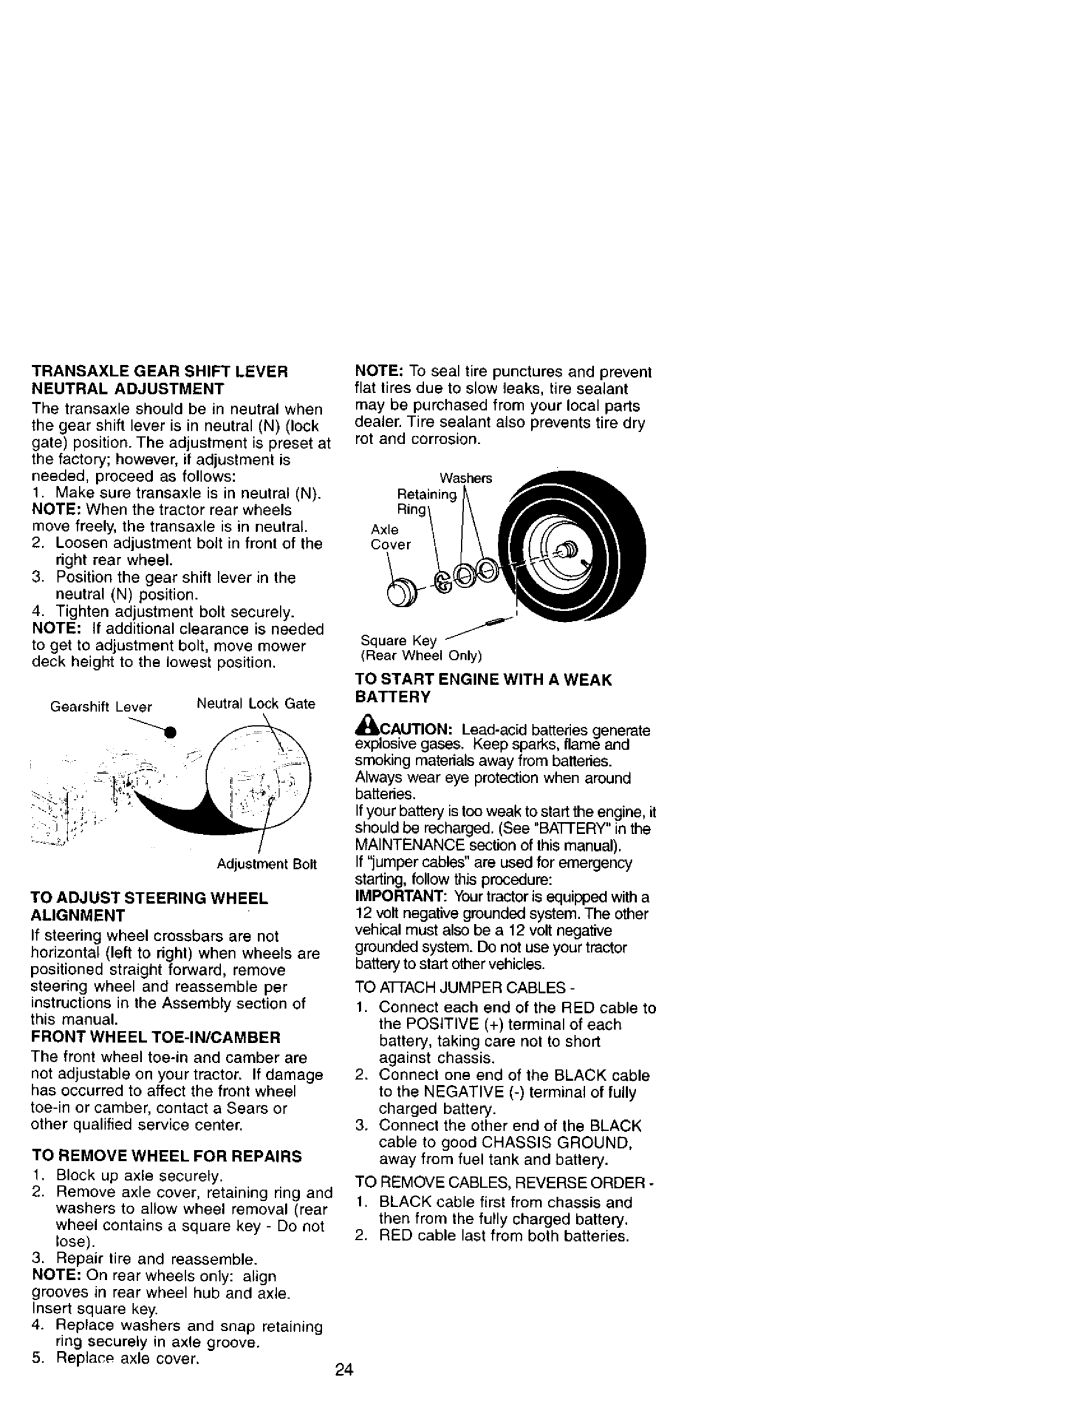 Craftsman 917.27207 owner manual Transaxle Gear Shift Lever Neutral Adjustment 